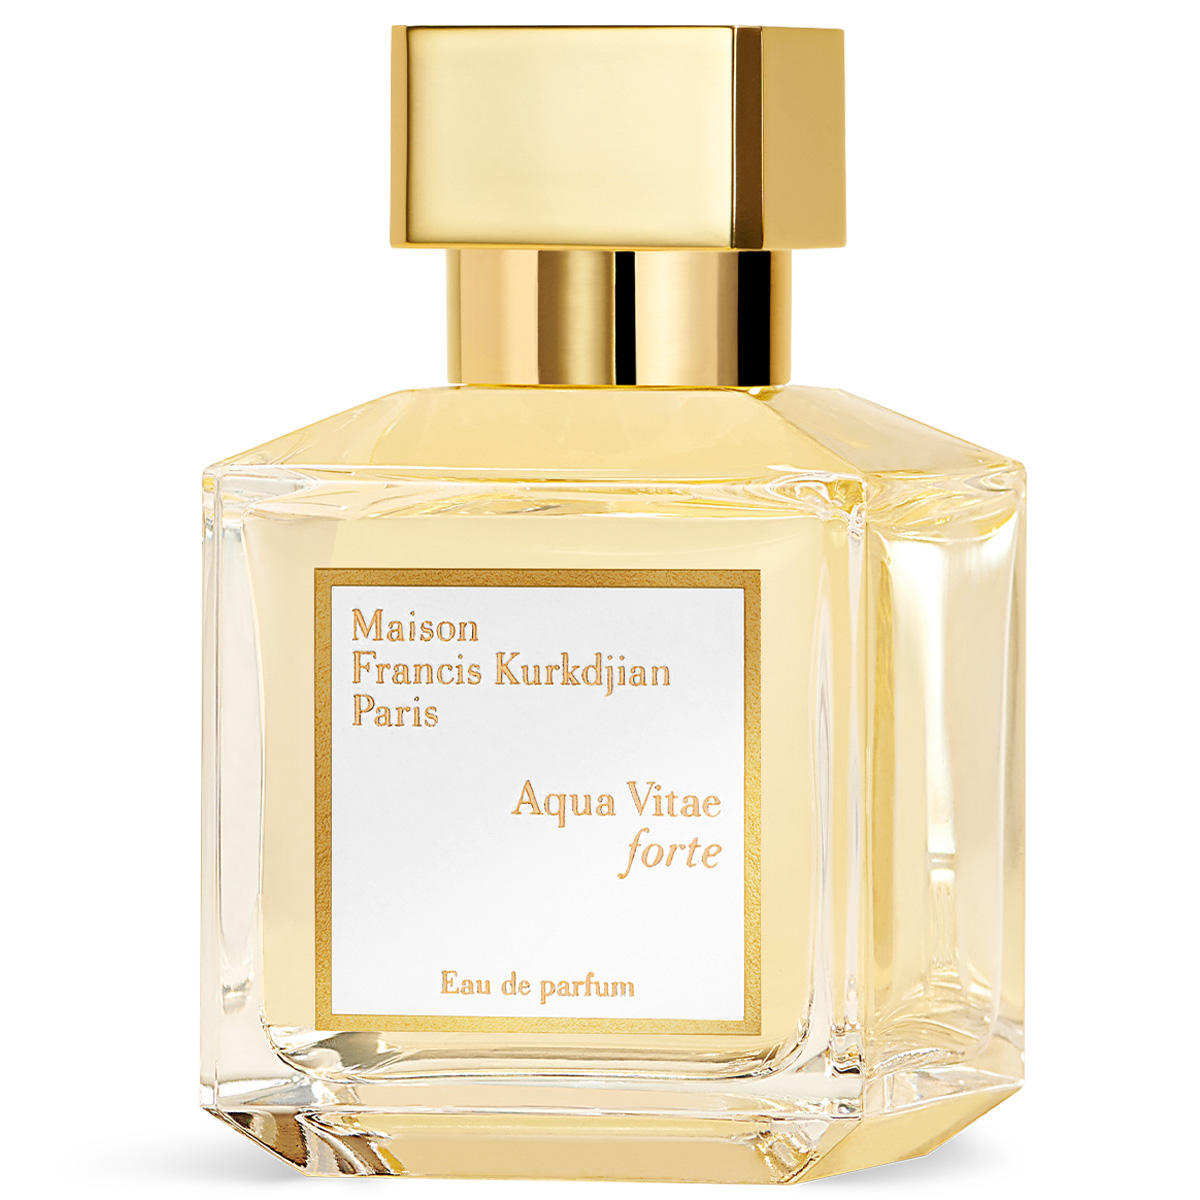 Maison Francis Kurkdjian Paris Aqua Vitae forte Eau de Parfum 70 ml - 3